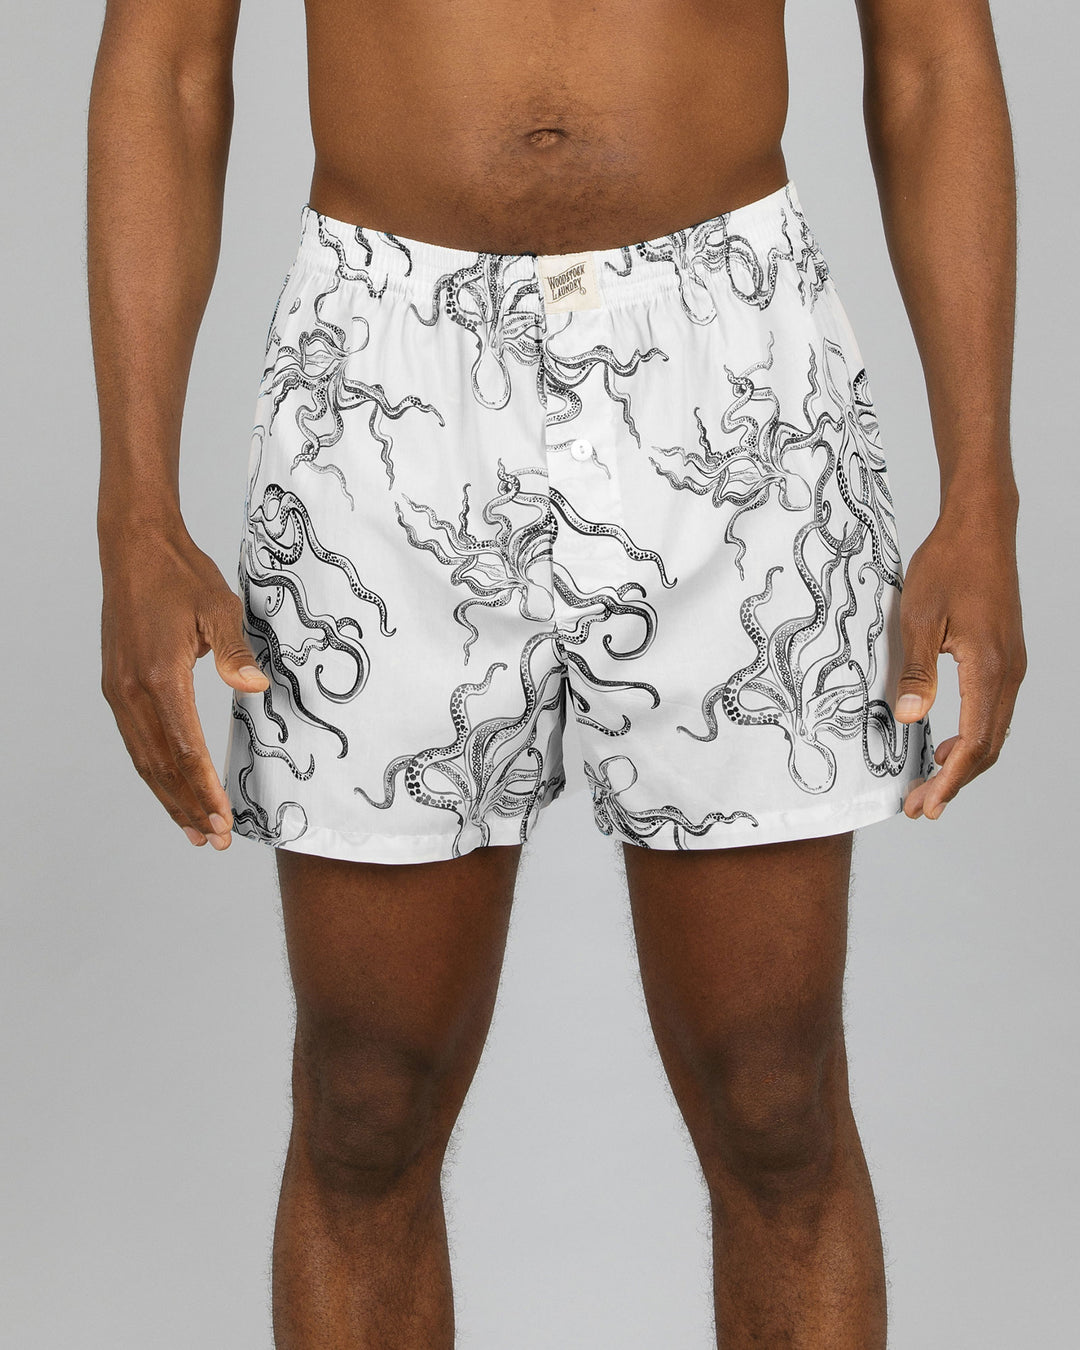 Mens Boxer Shorts Octopus White Front - Woodstock Laundry